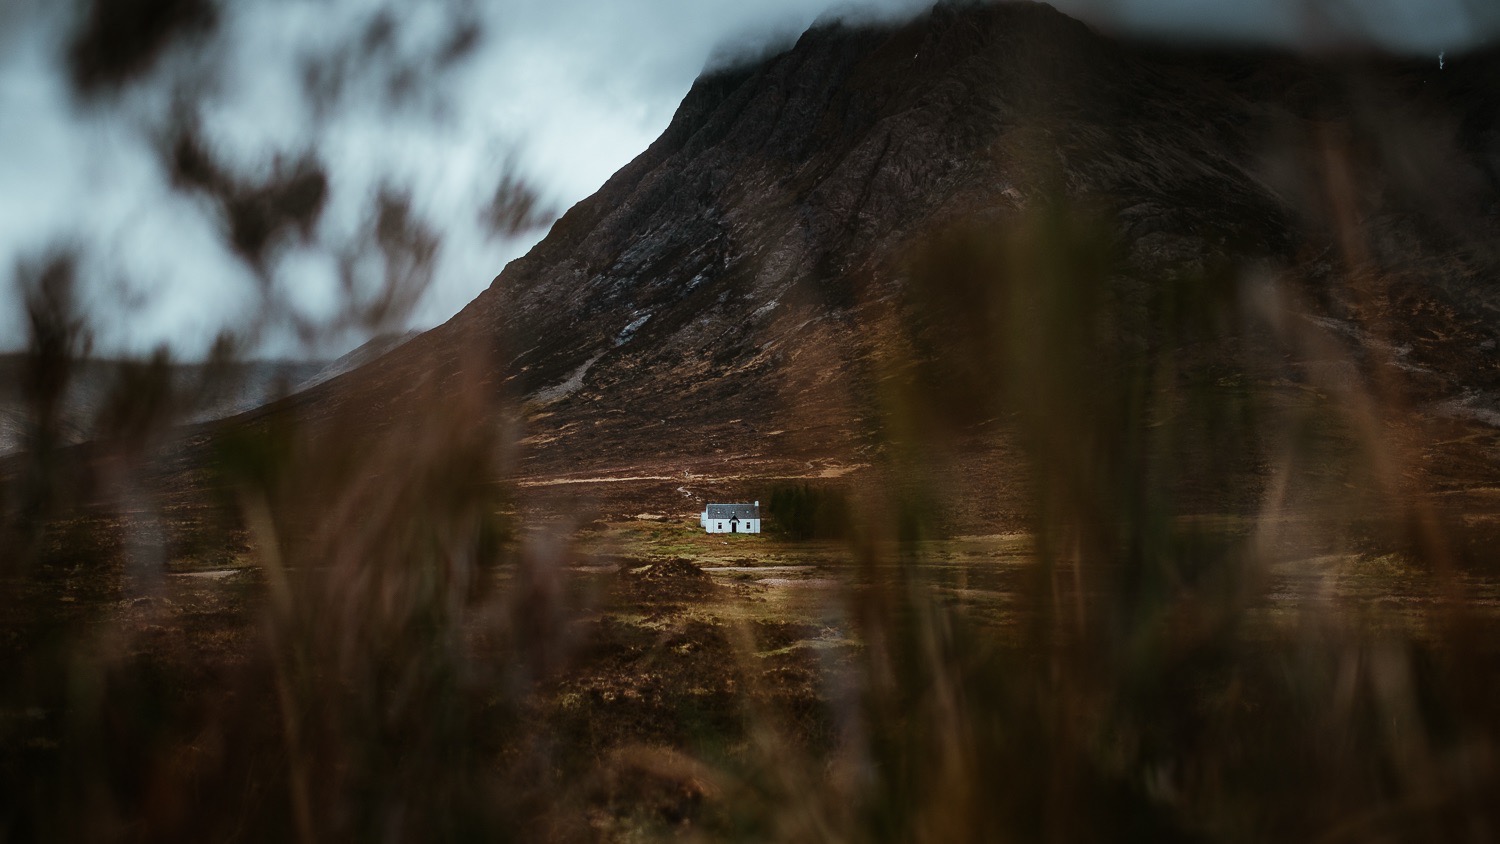 0027-scotland-tamron-le monde de la photo-paysage-20190508162942-compress.jpg